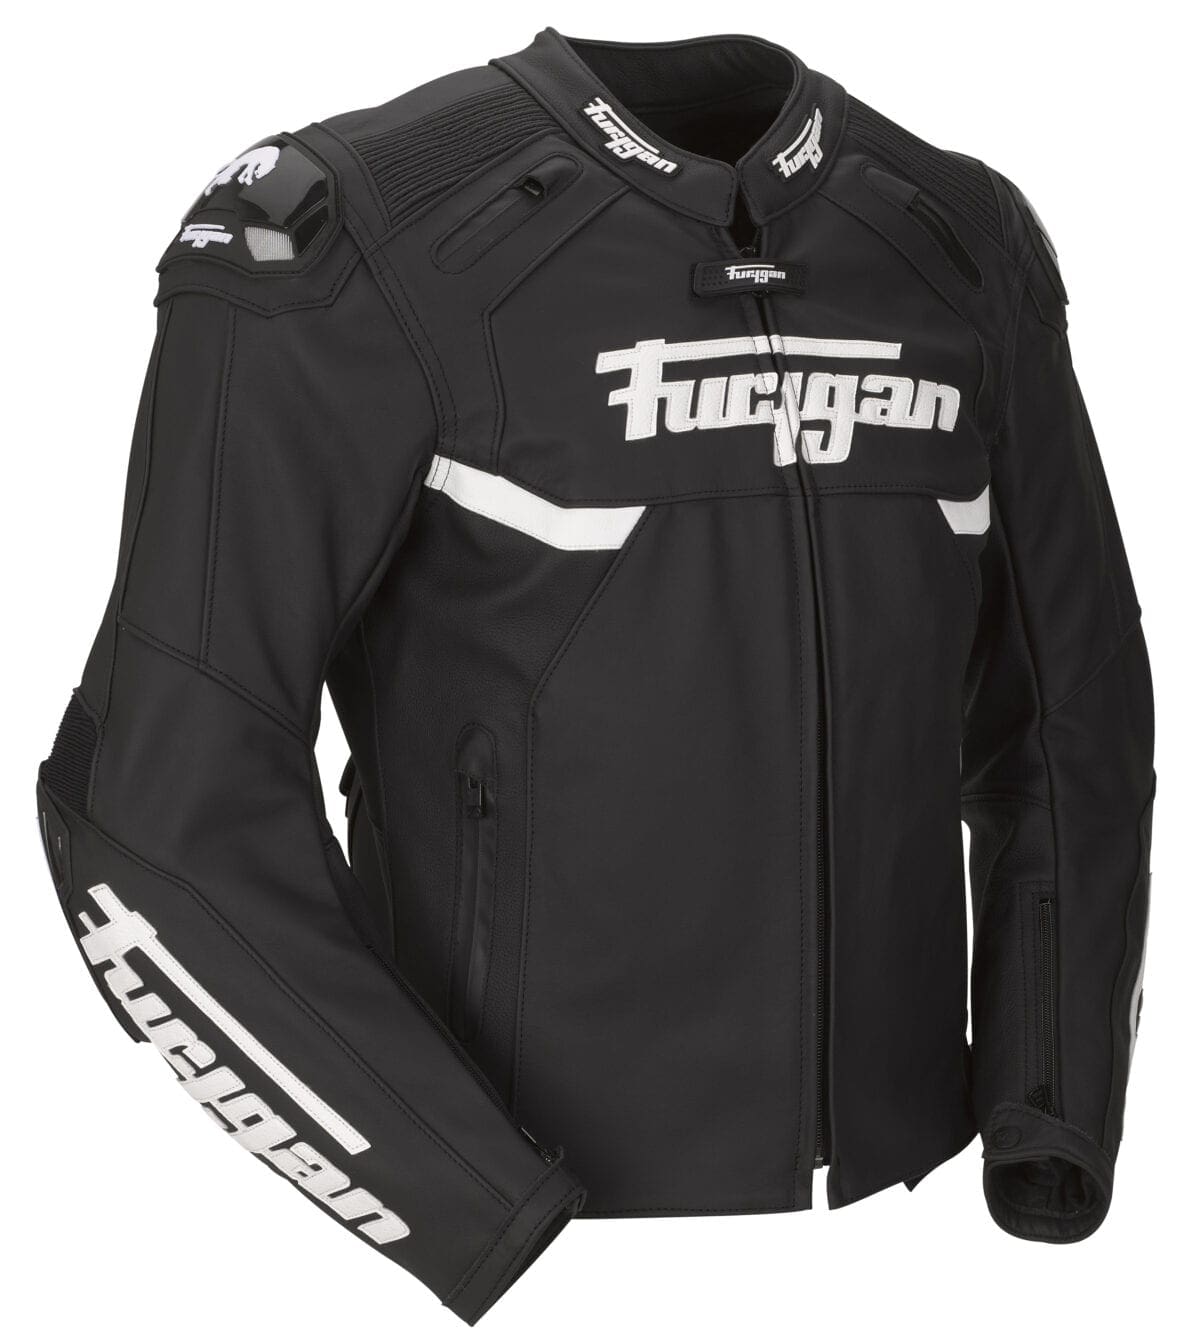 Furygan products for sale | eBay